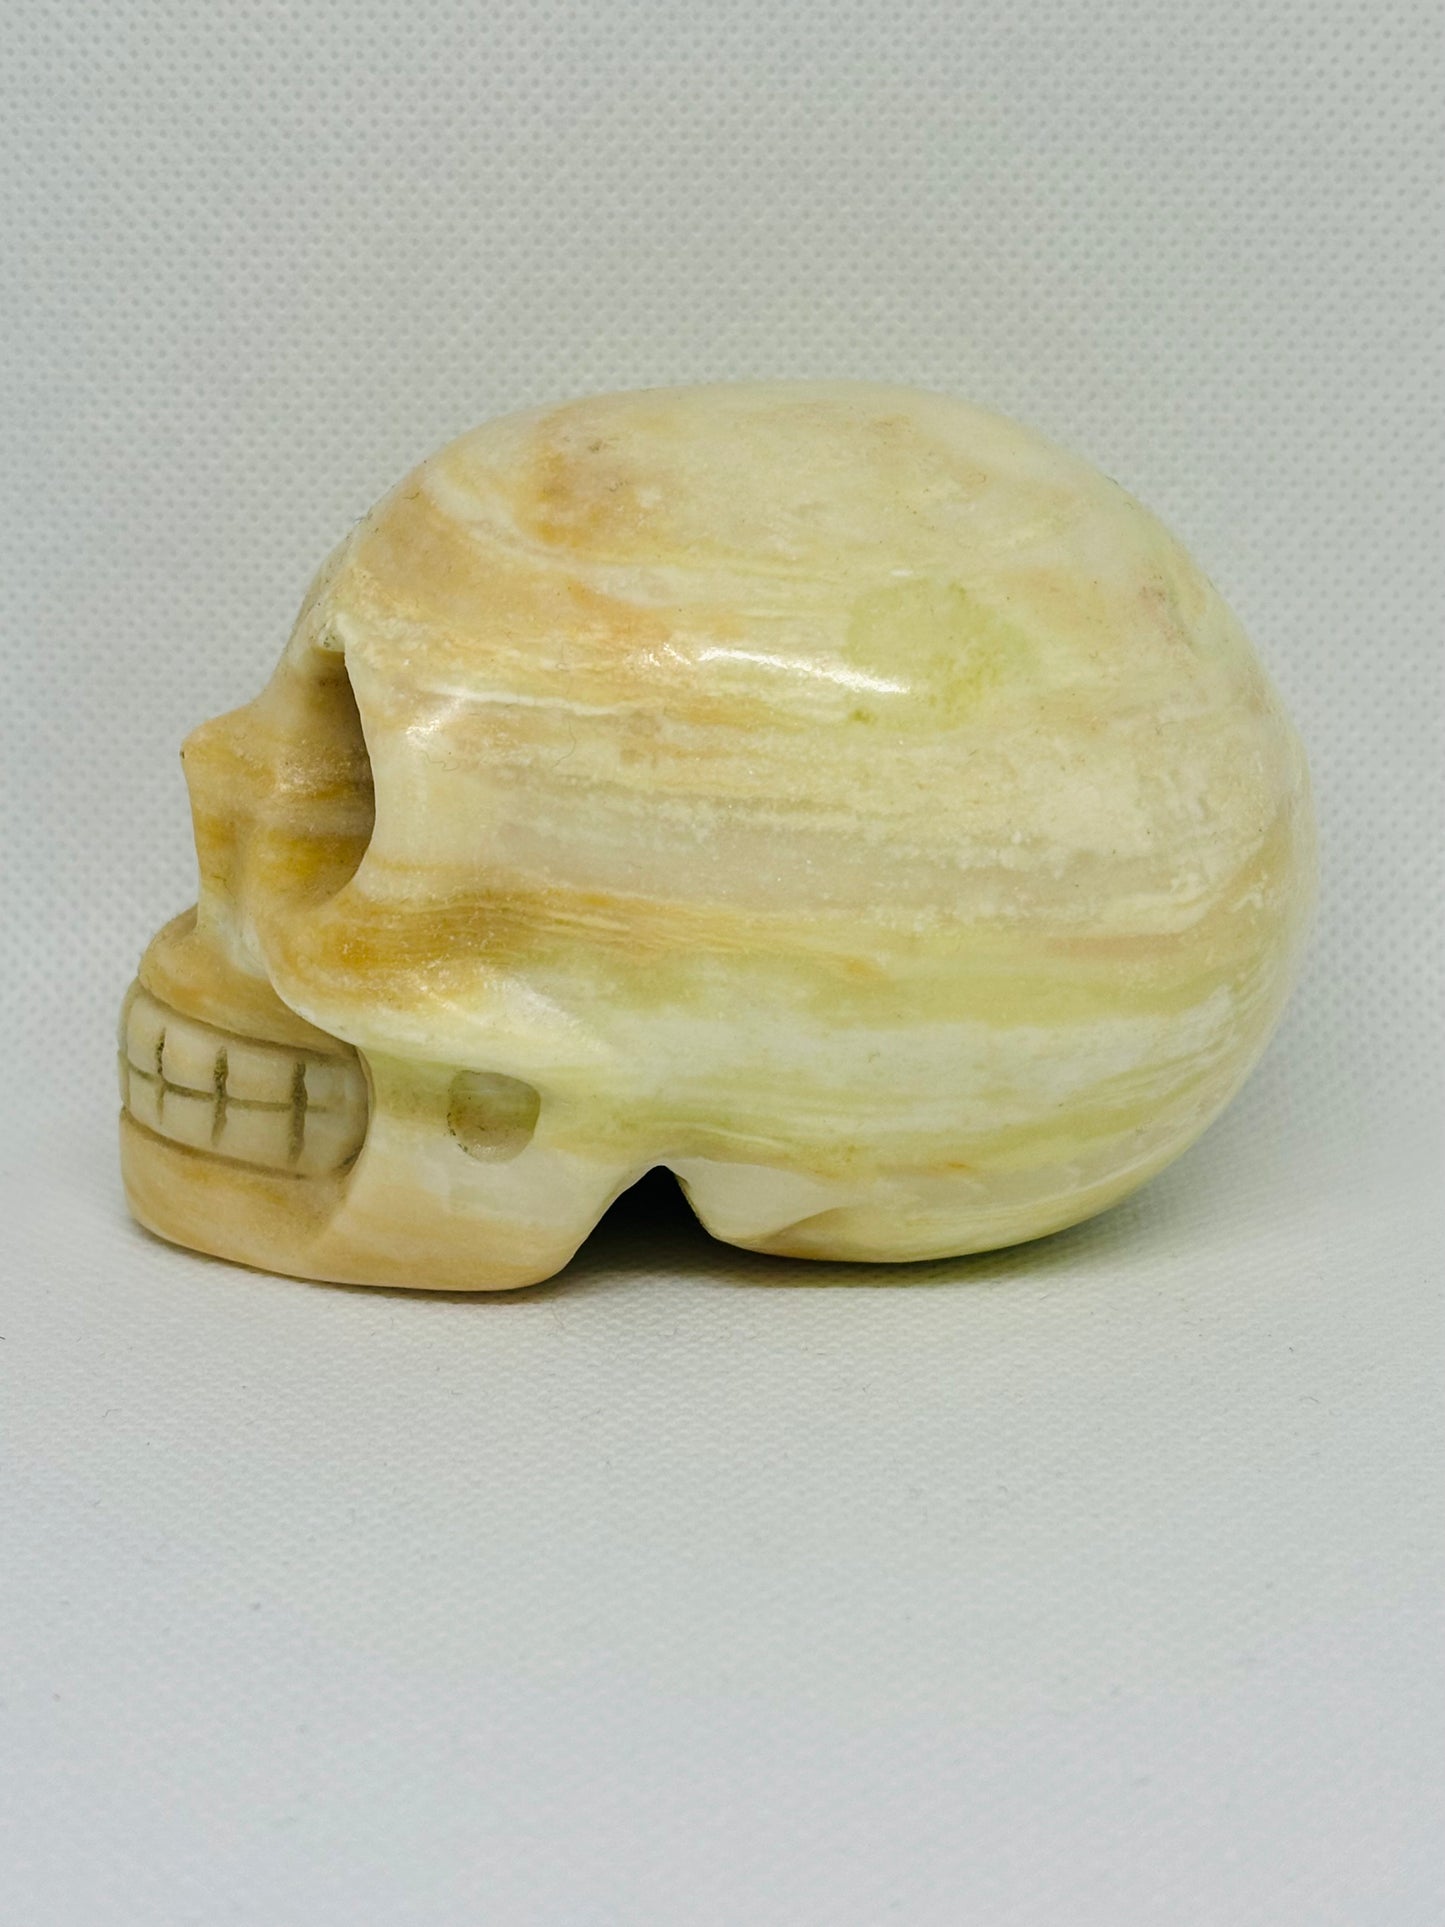 Carved Crystal Skull 1.1lb #WG2